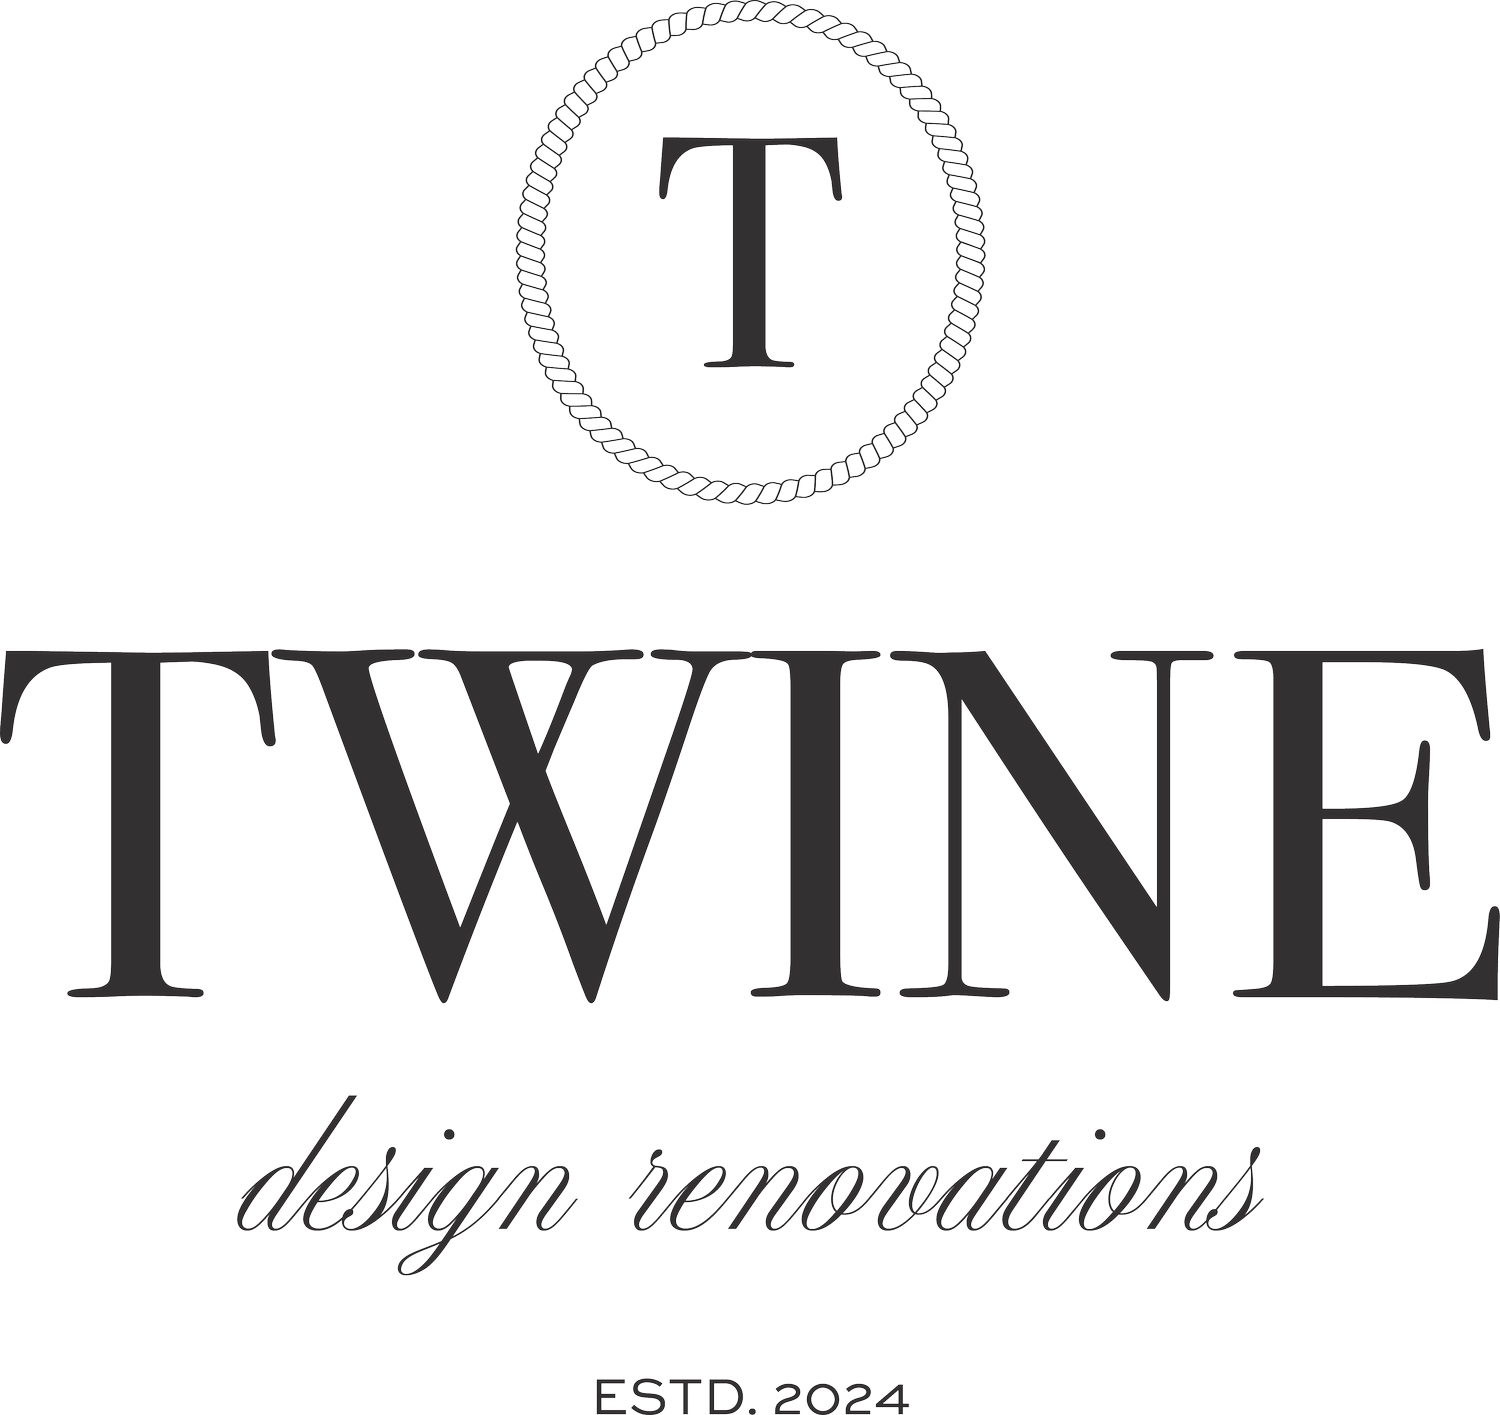 Twine Design Renovations